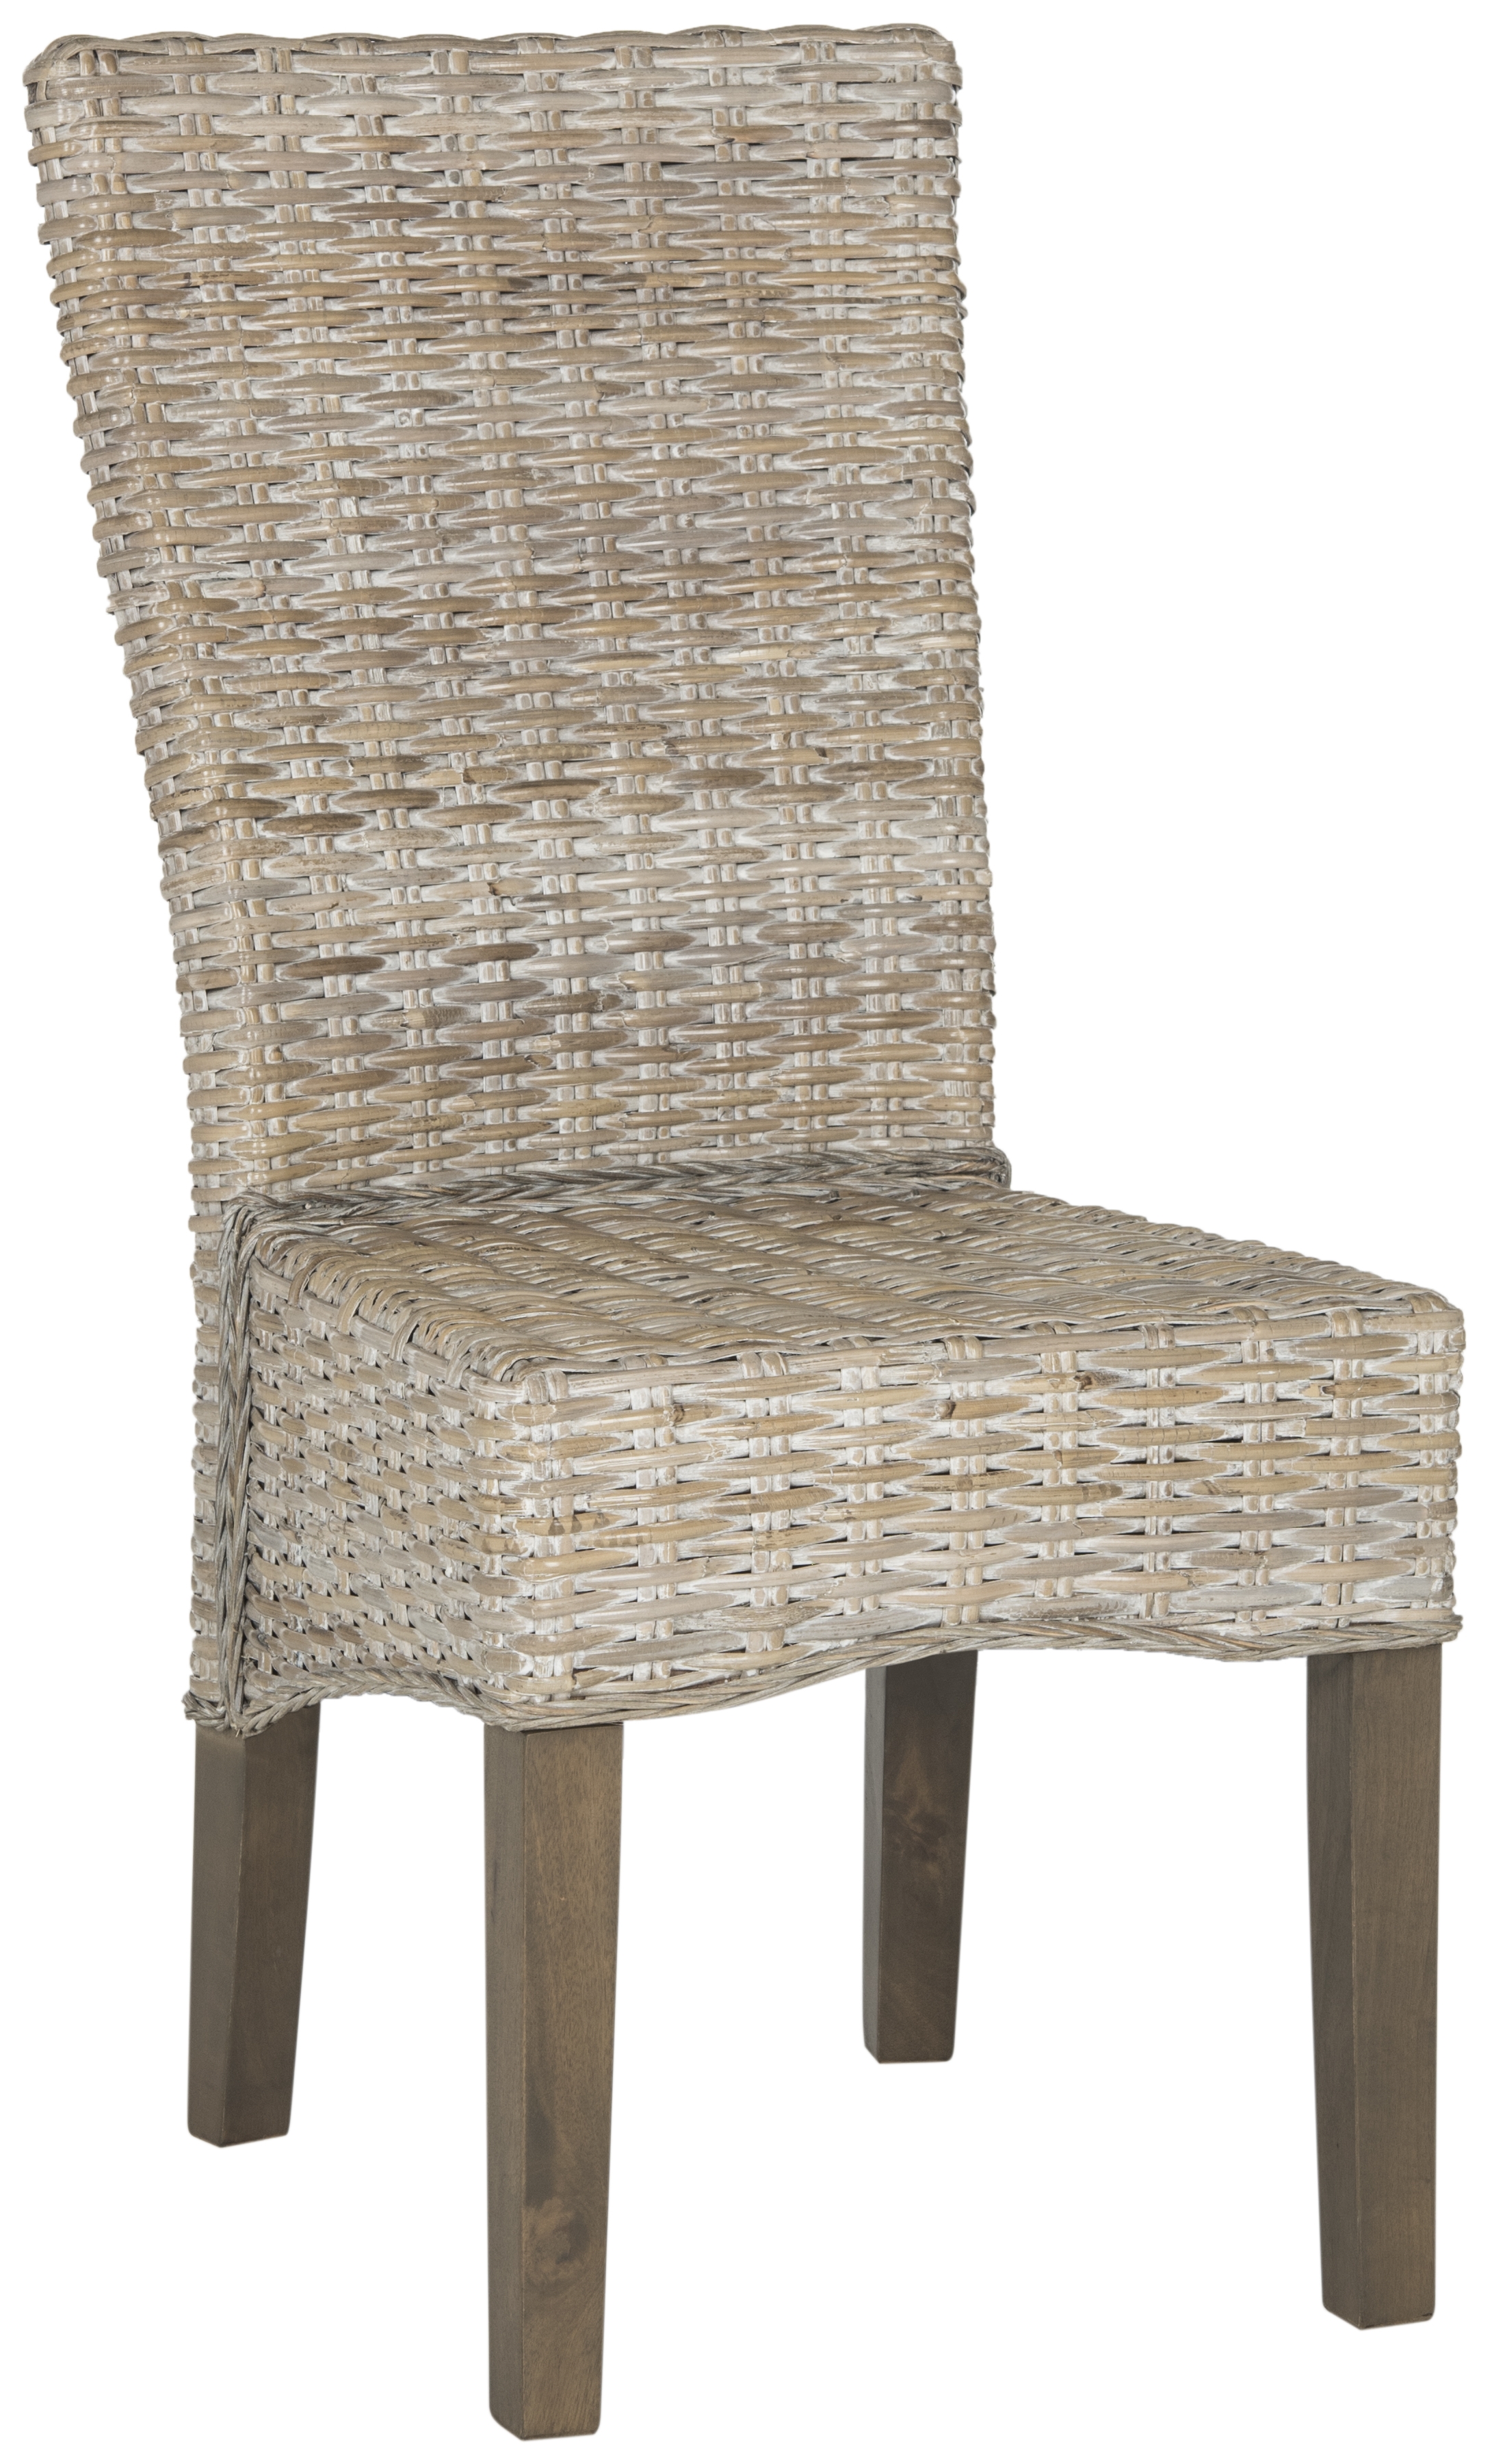 Ozias 19''H Wicker Dining Chair - White Wash - Arlo Home - Image 3